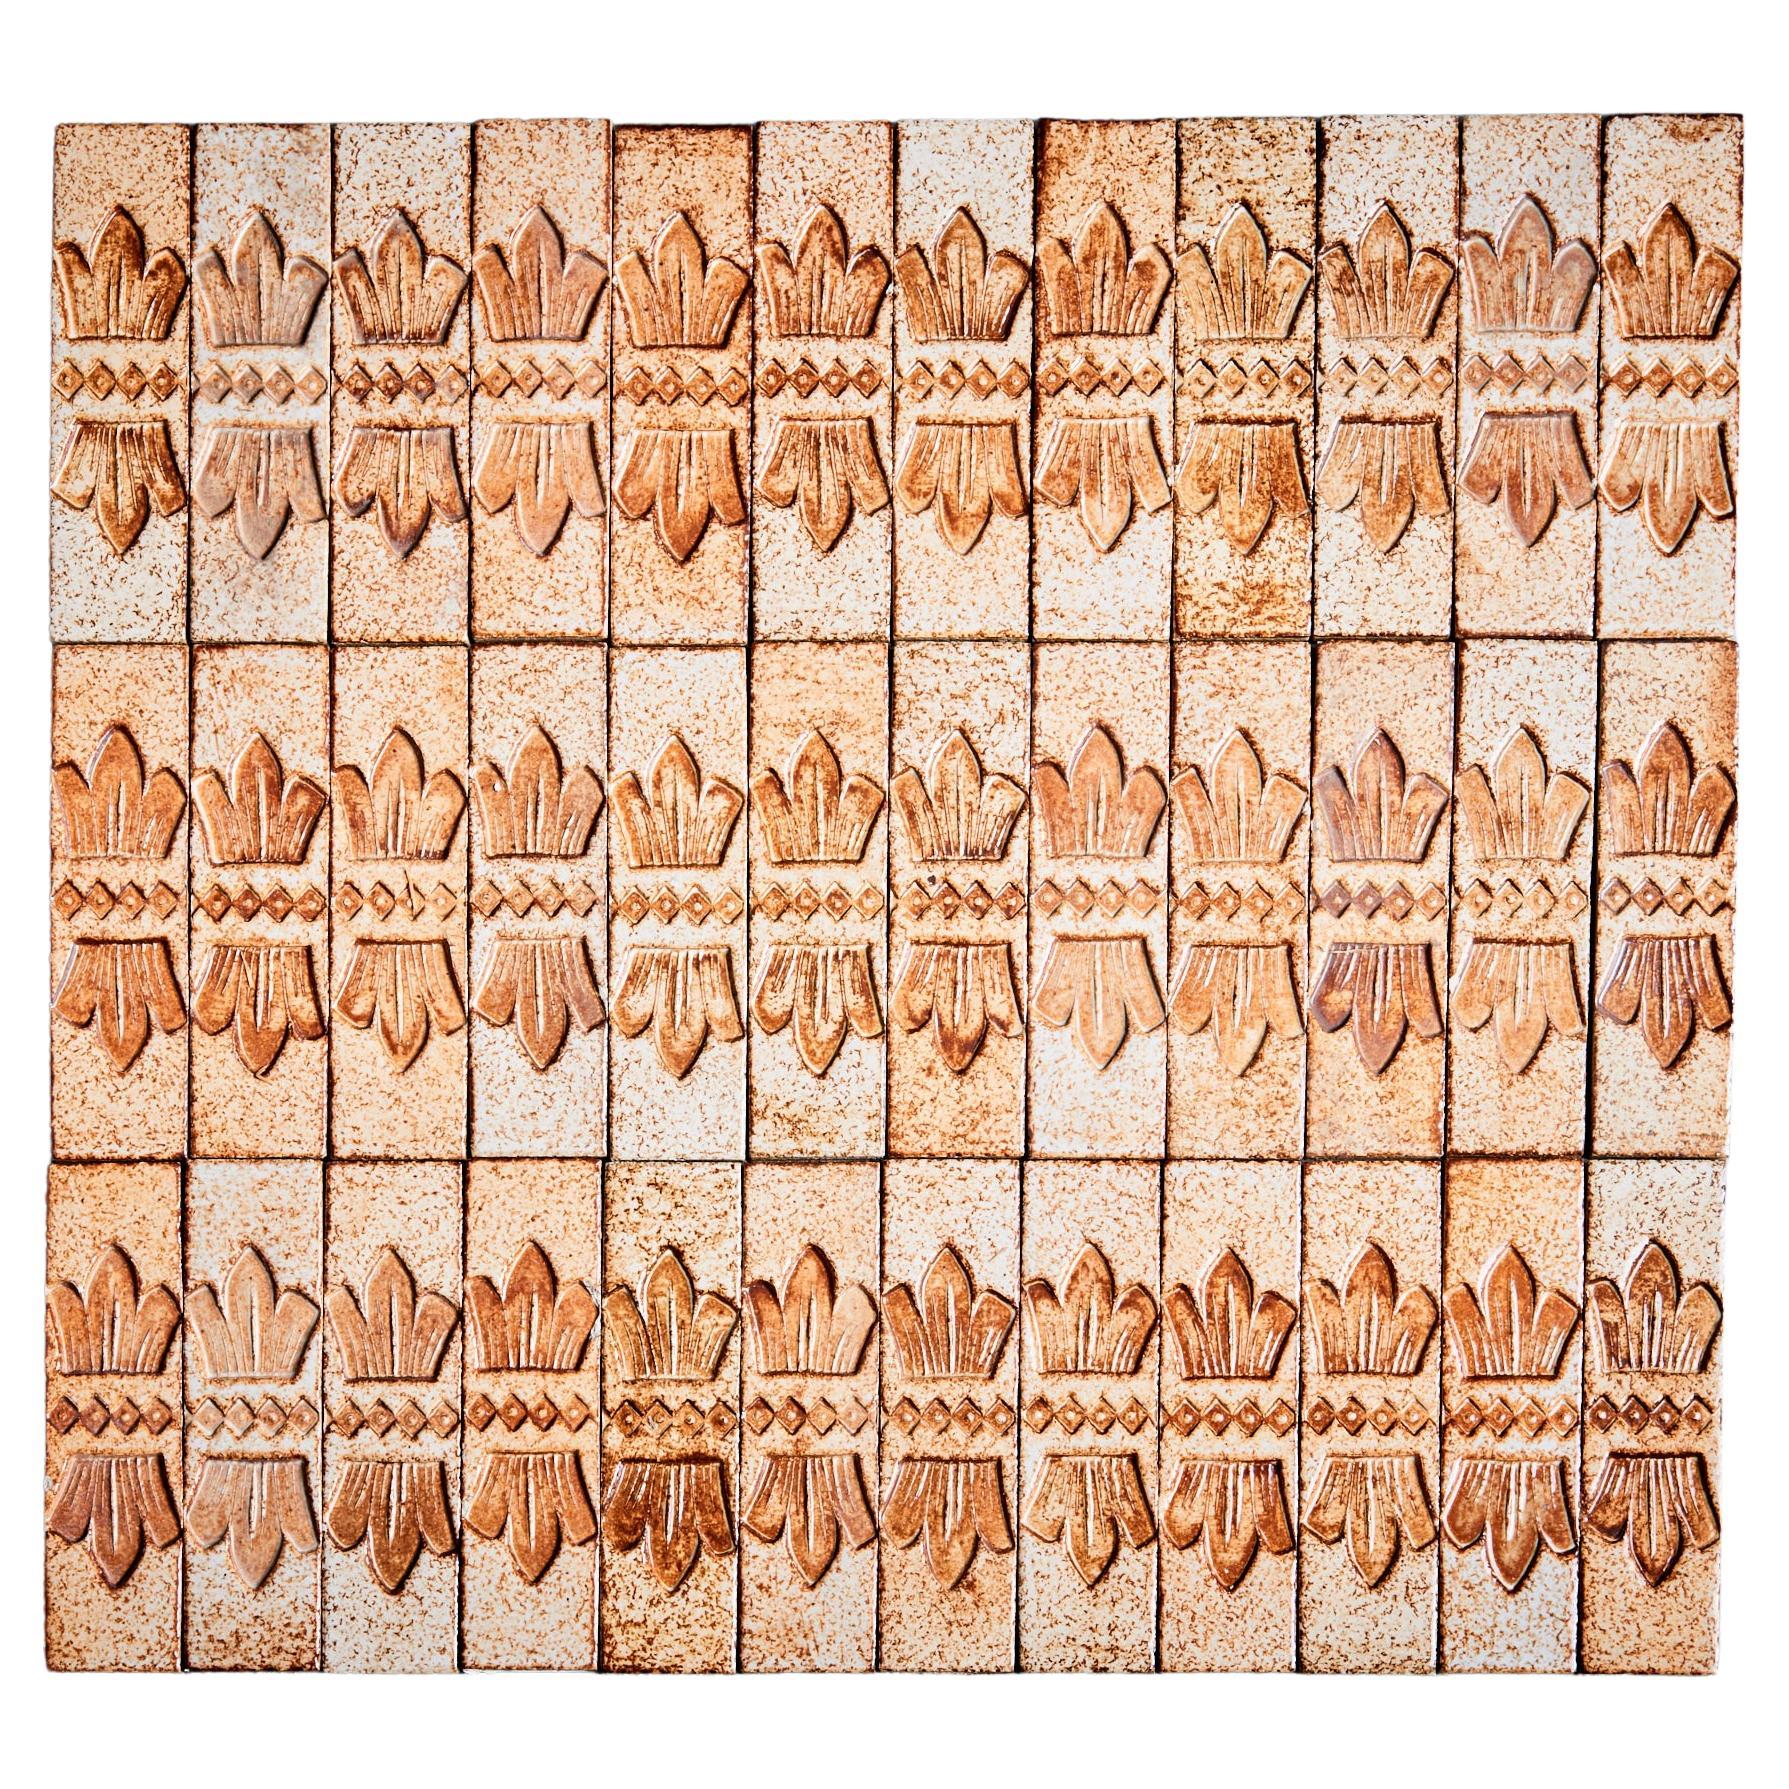 Set of 38 ceramic tiles by Roger Capron, France - 1970s  For Sale